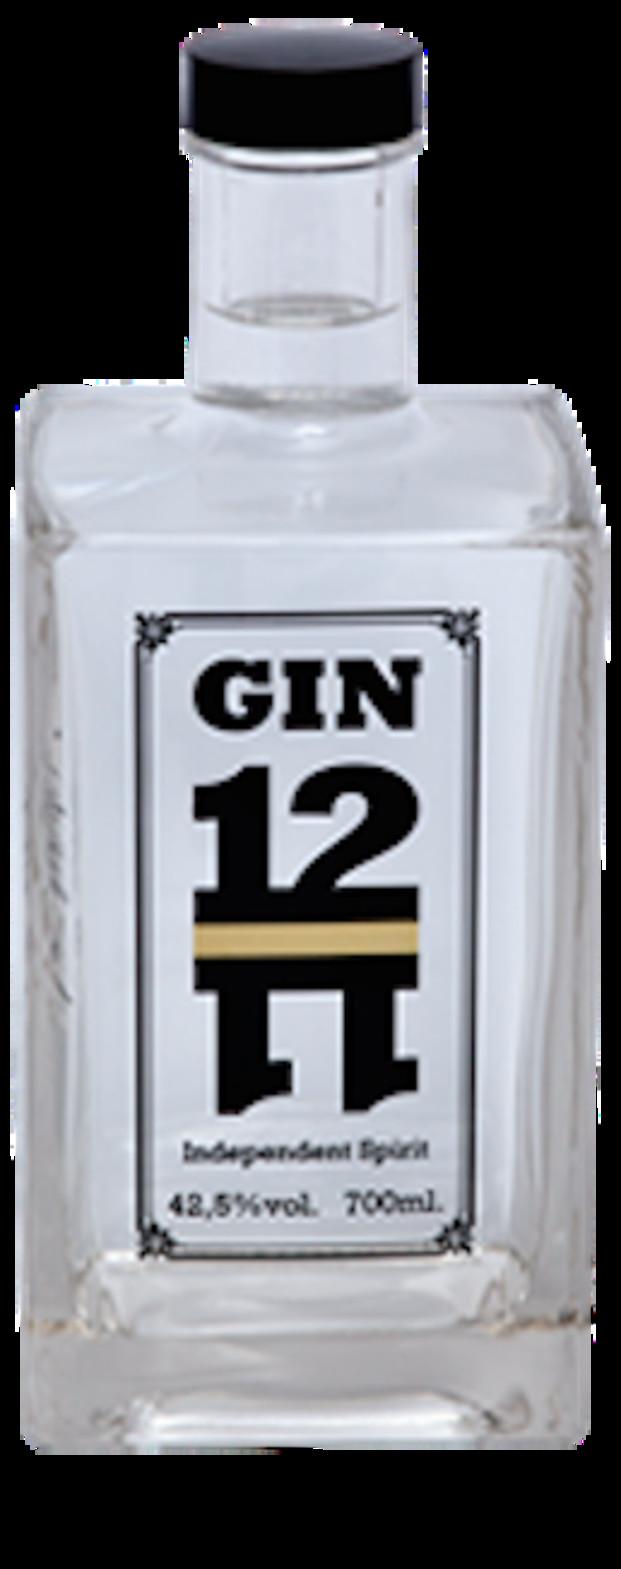 Gin 1211. Ginebra Premium 1211